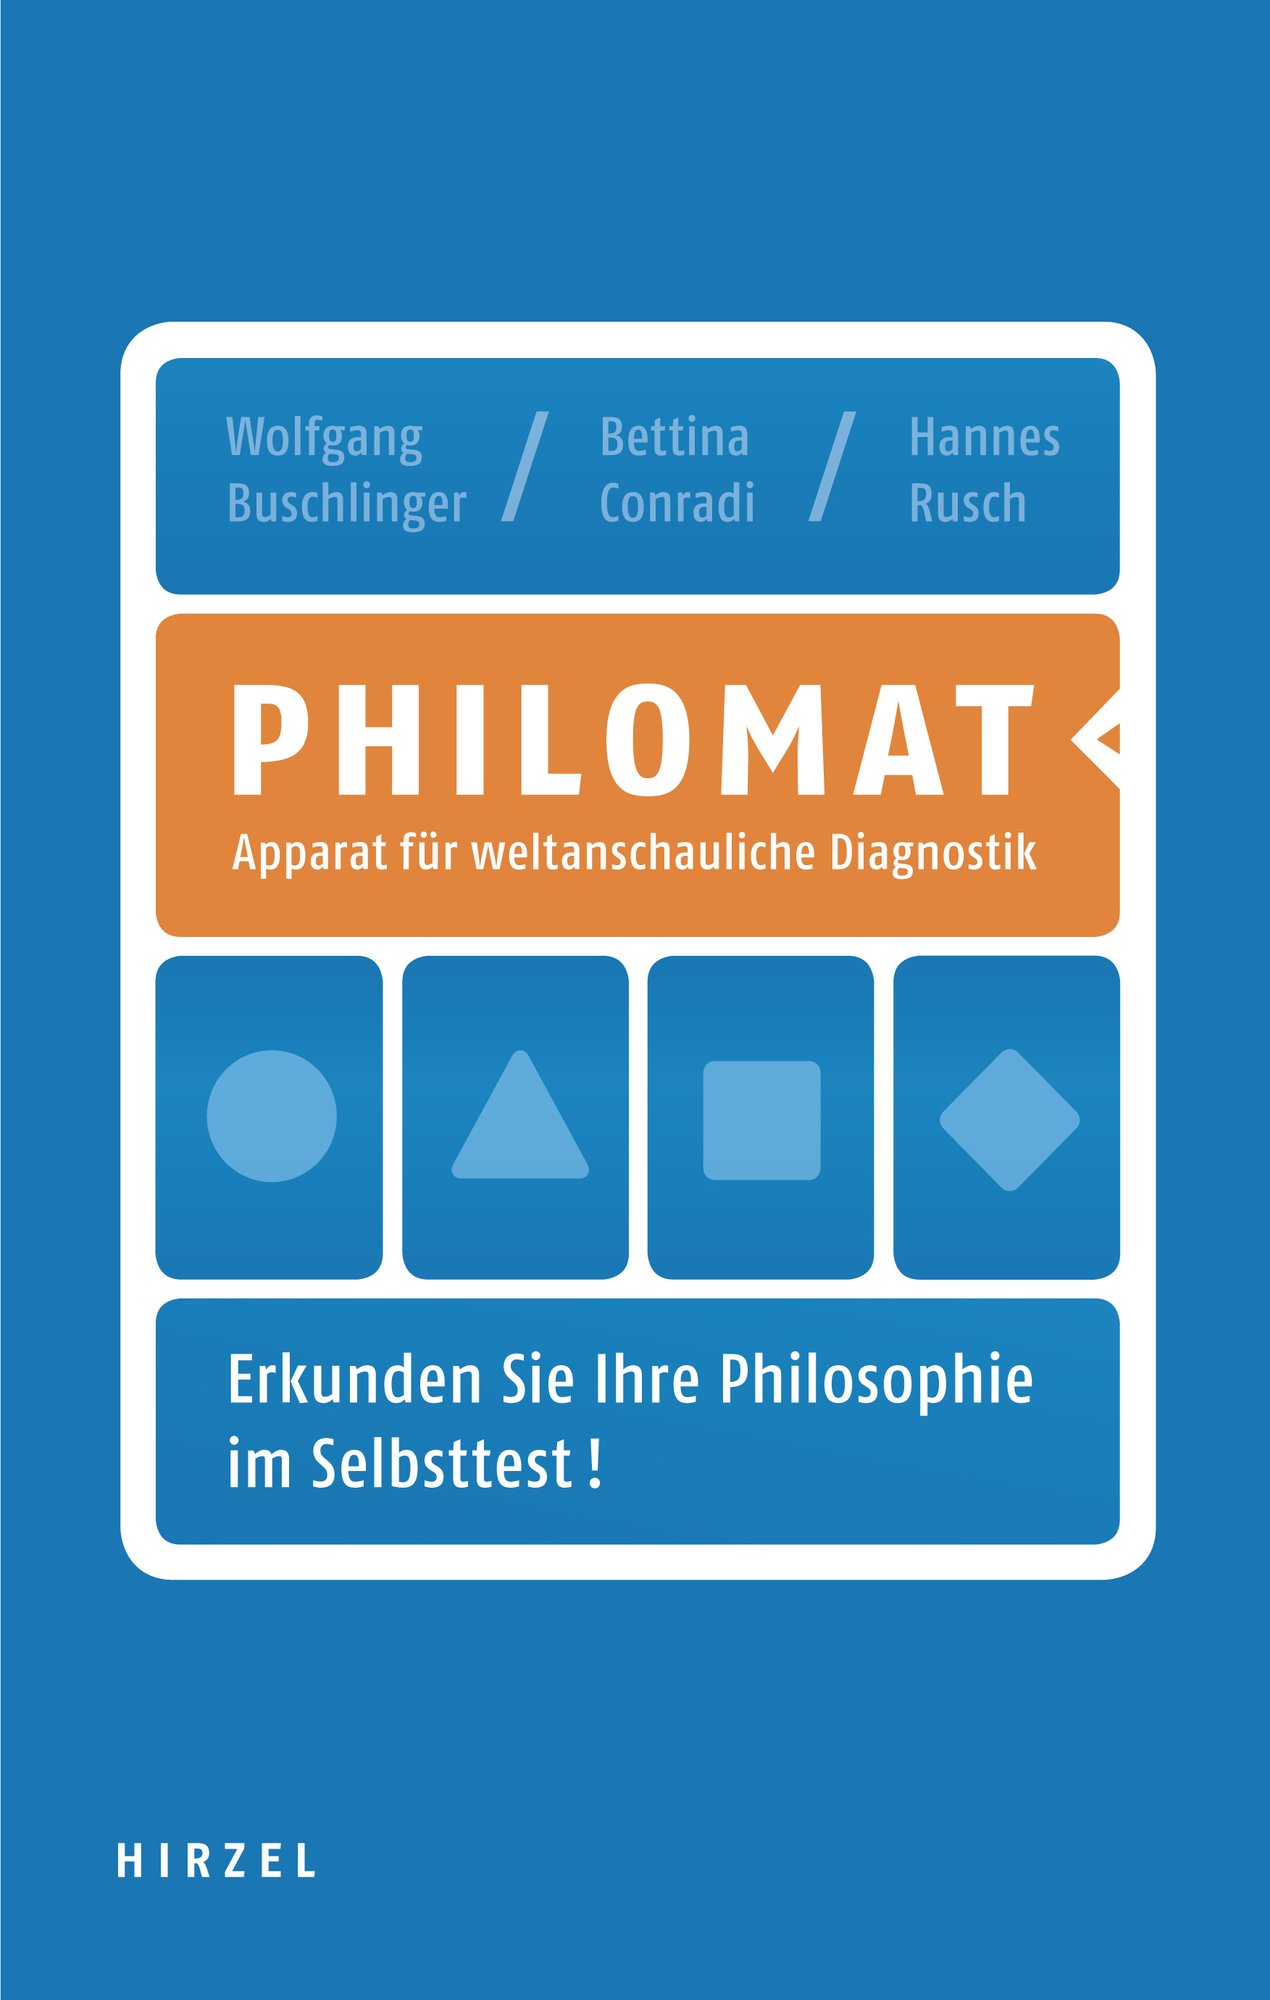 Philomat